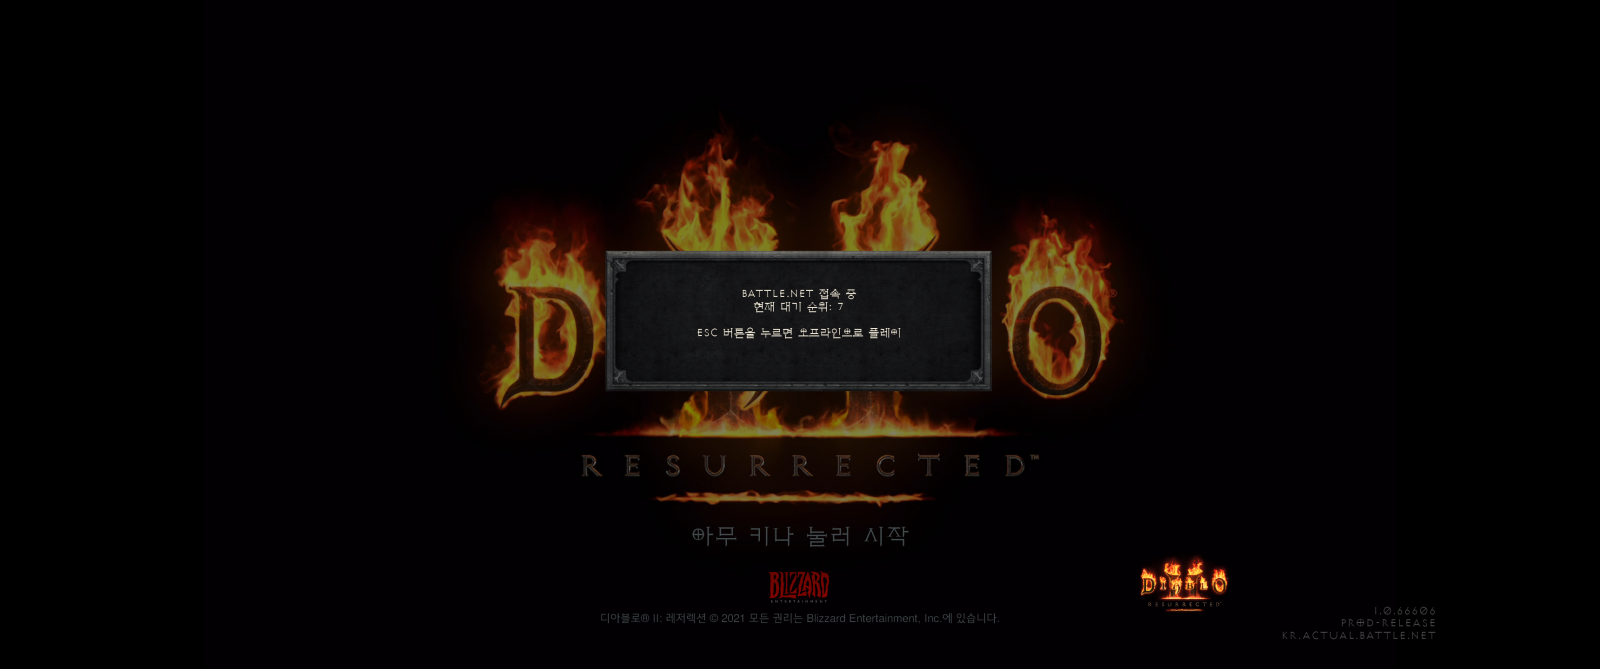 Diablo 2 Resurrected Screenshot 2021.10.26 - 18.02.08.63.png